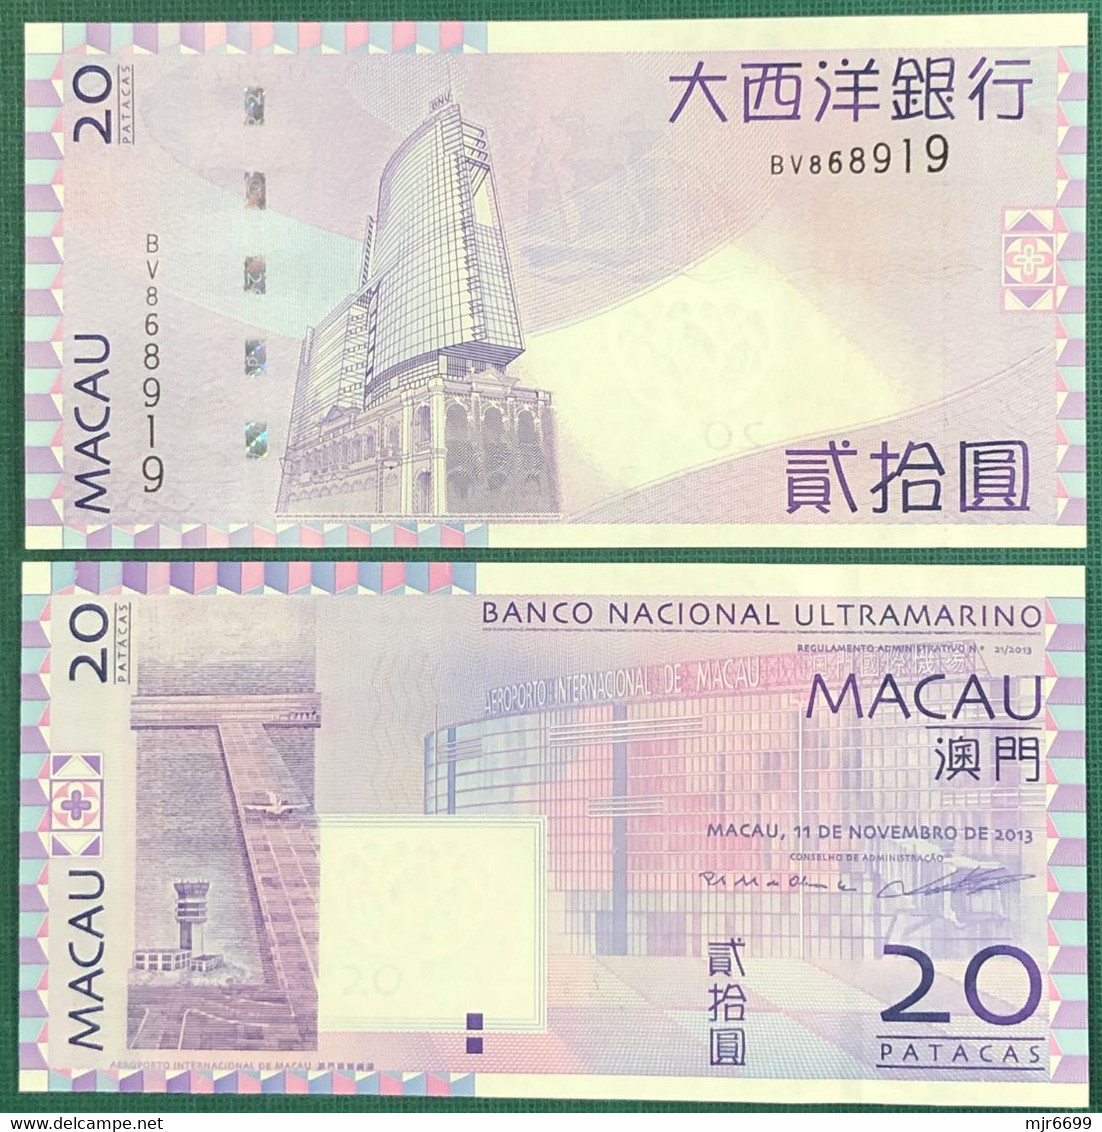 MACAU, MACAO 2013 BANCO NACIONAL ULTRAMARINO 20 PATACAS UNC - Macau